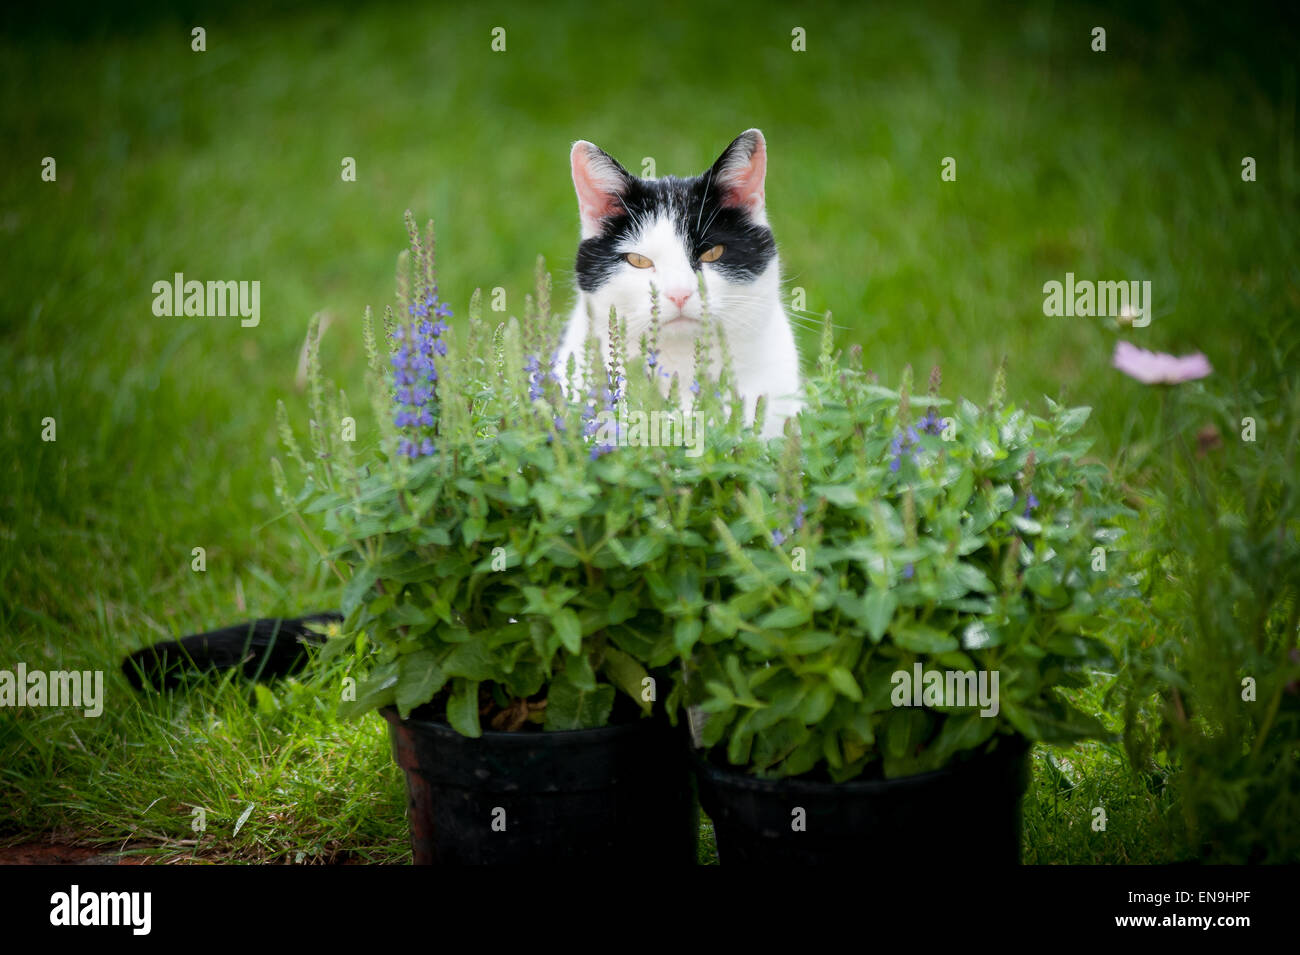 Grump cat in the garden Stock Photo